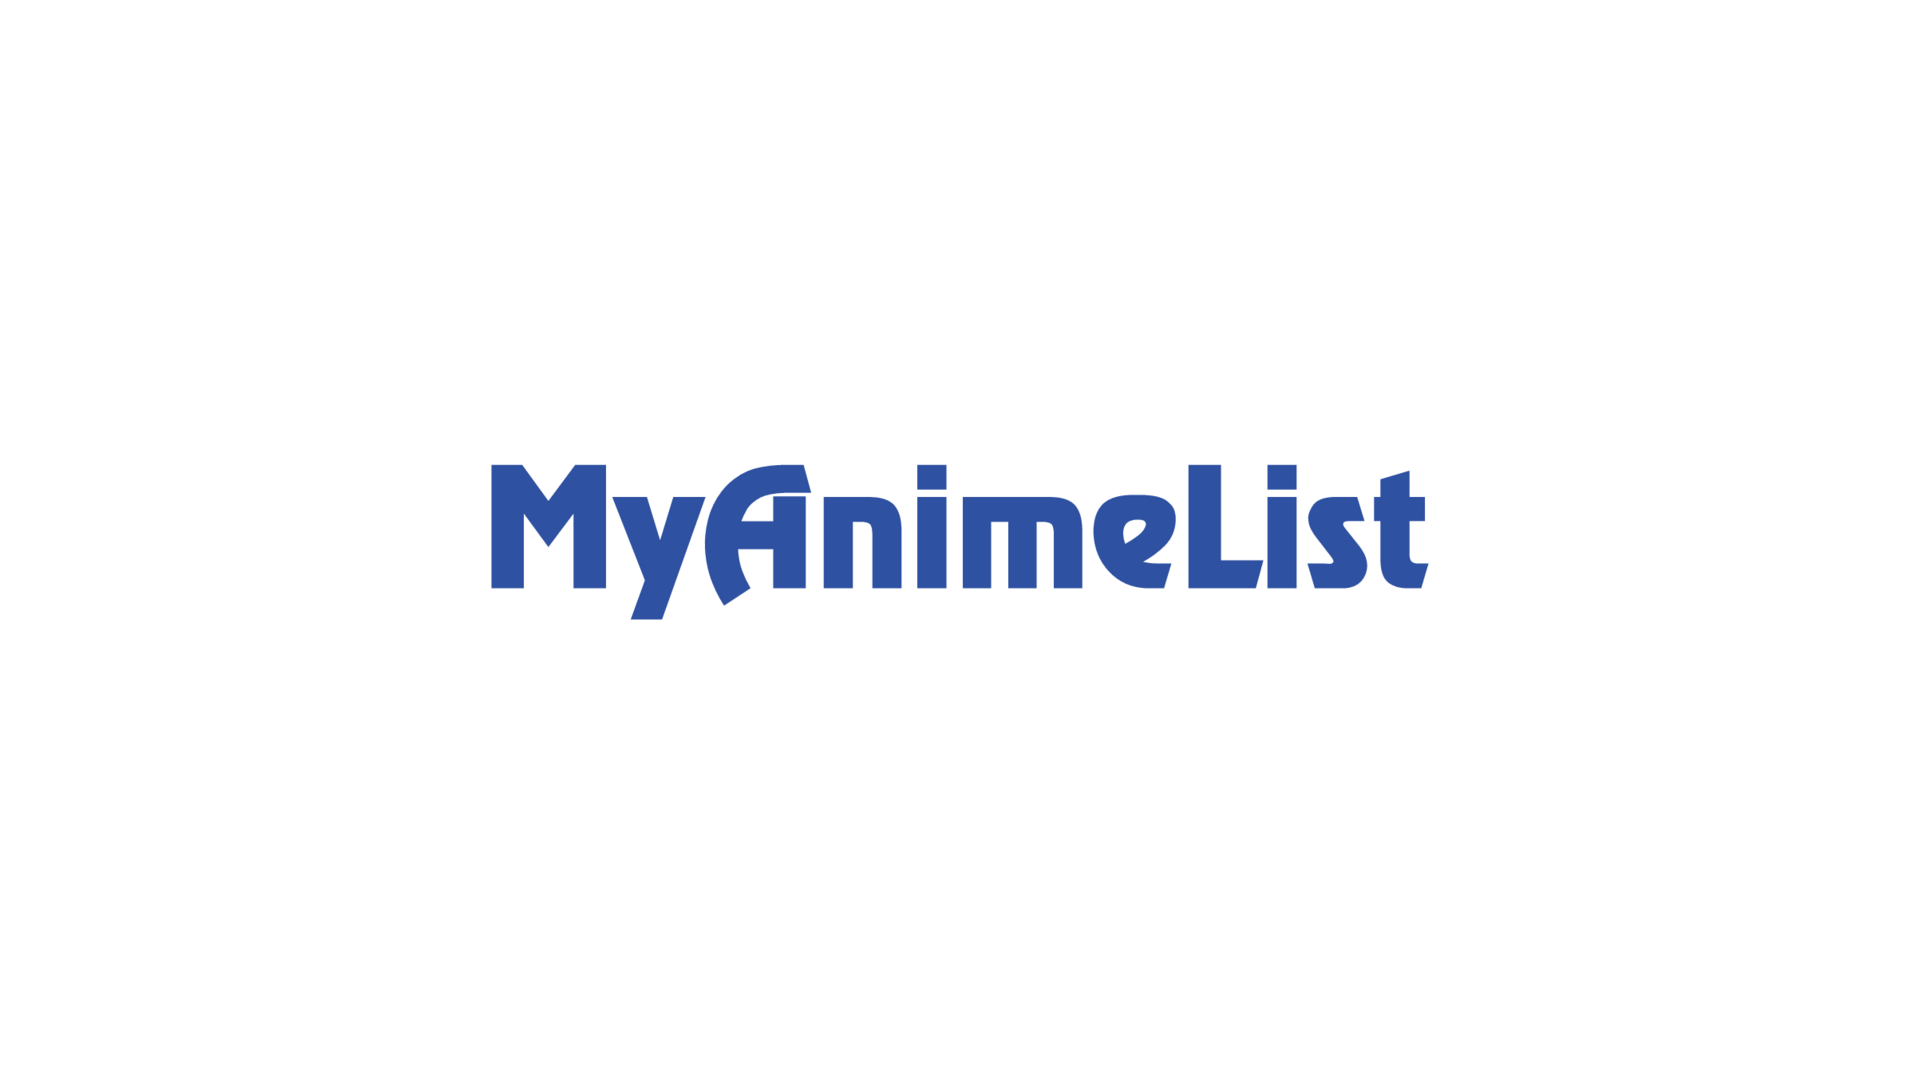 10 Best Anime Not On Crunchyroll, According to MyAnimeList